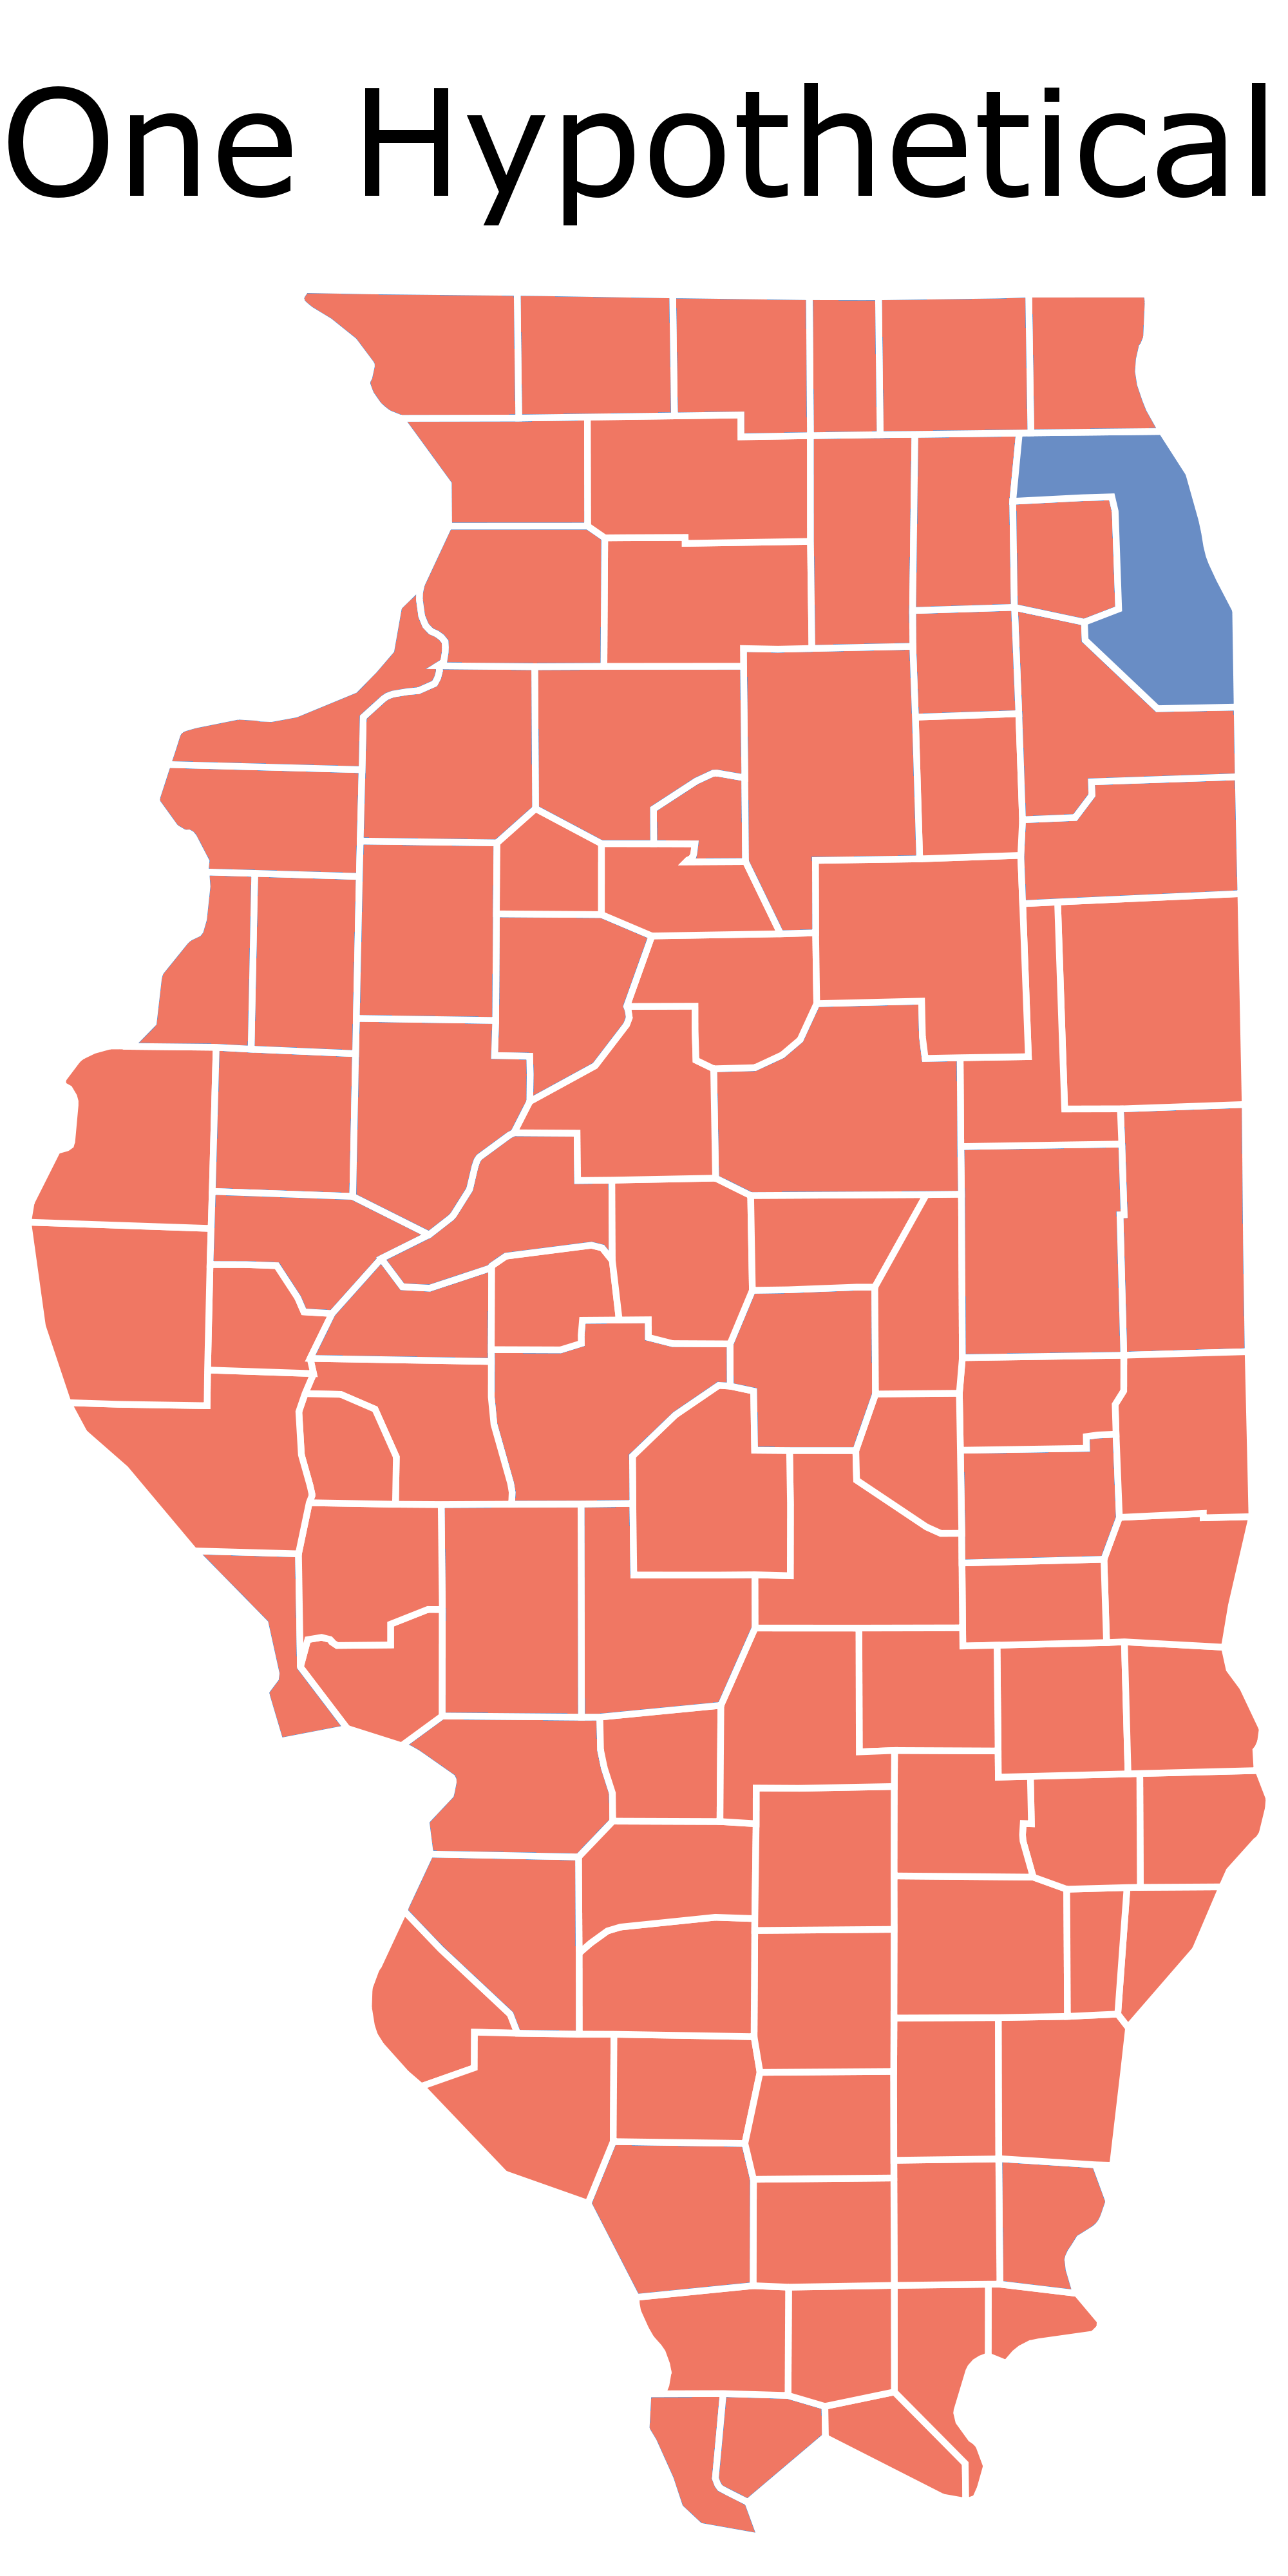 Previewing Senate Elections: Illinois2000 x 4000